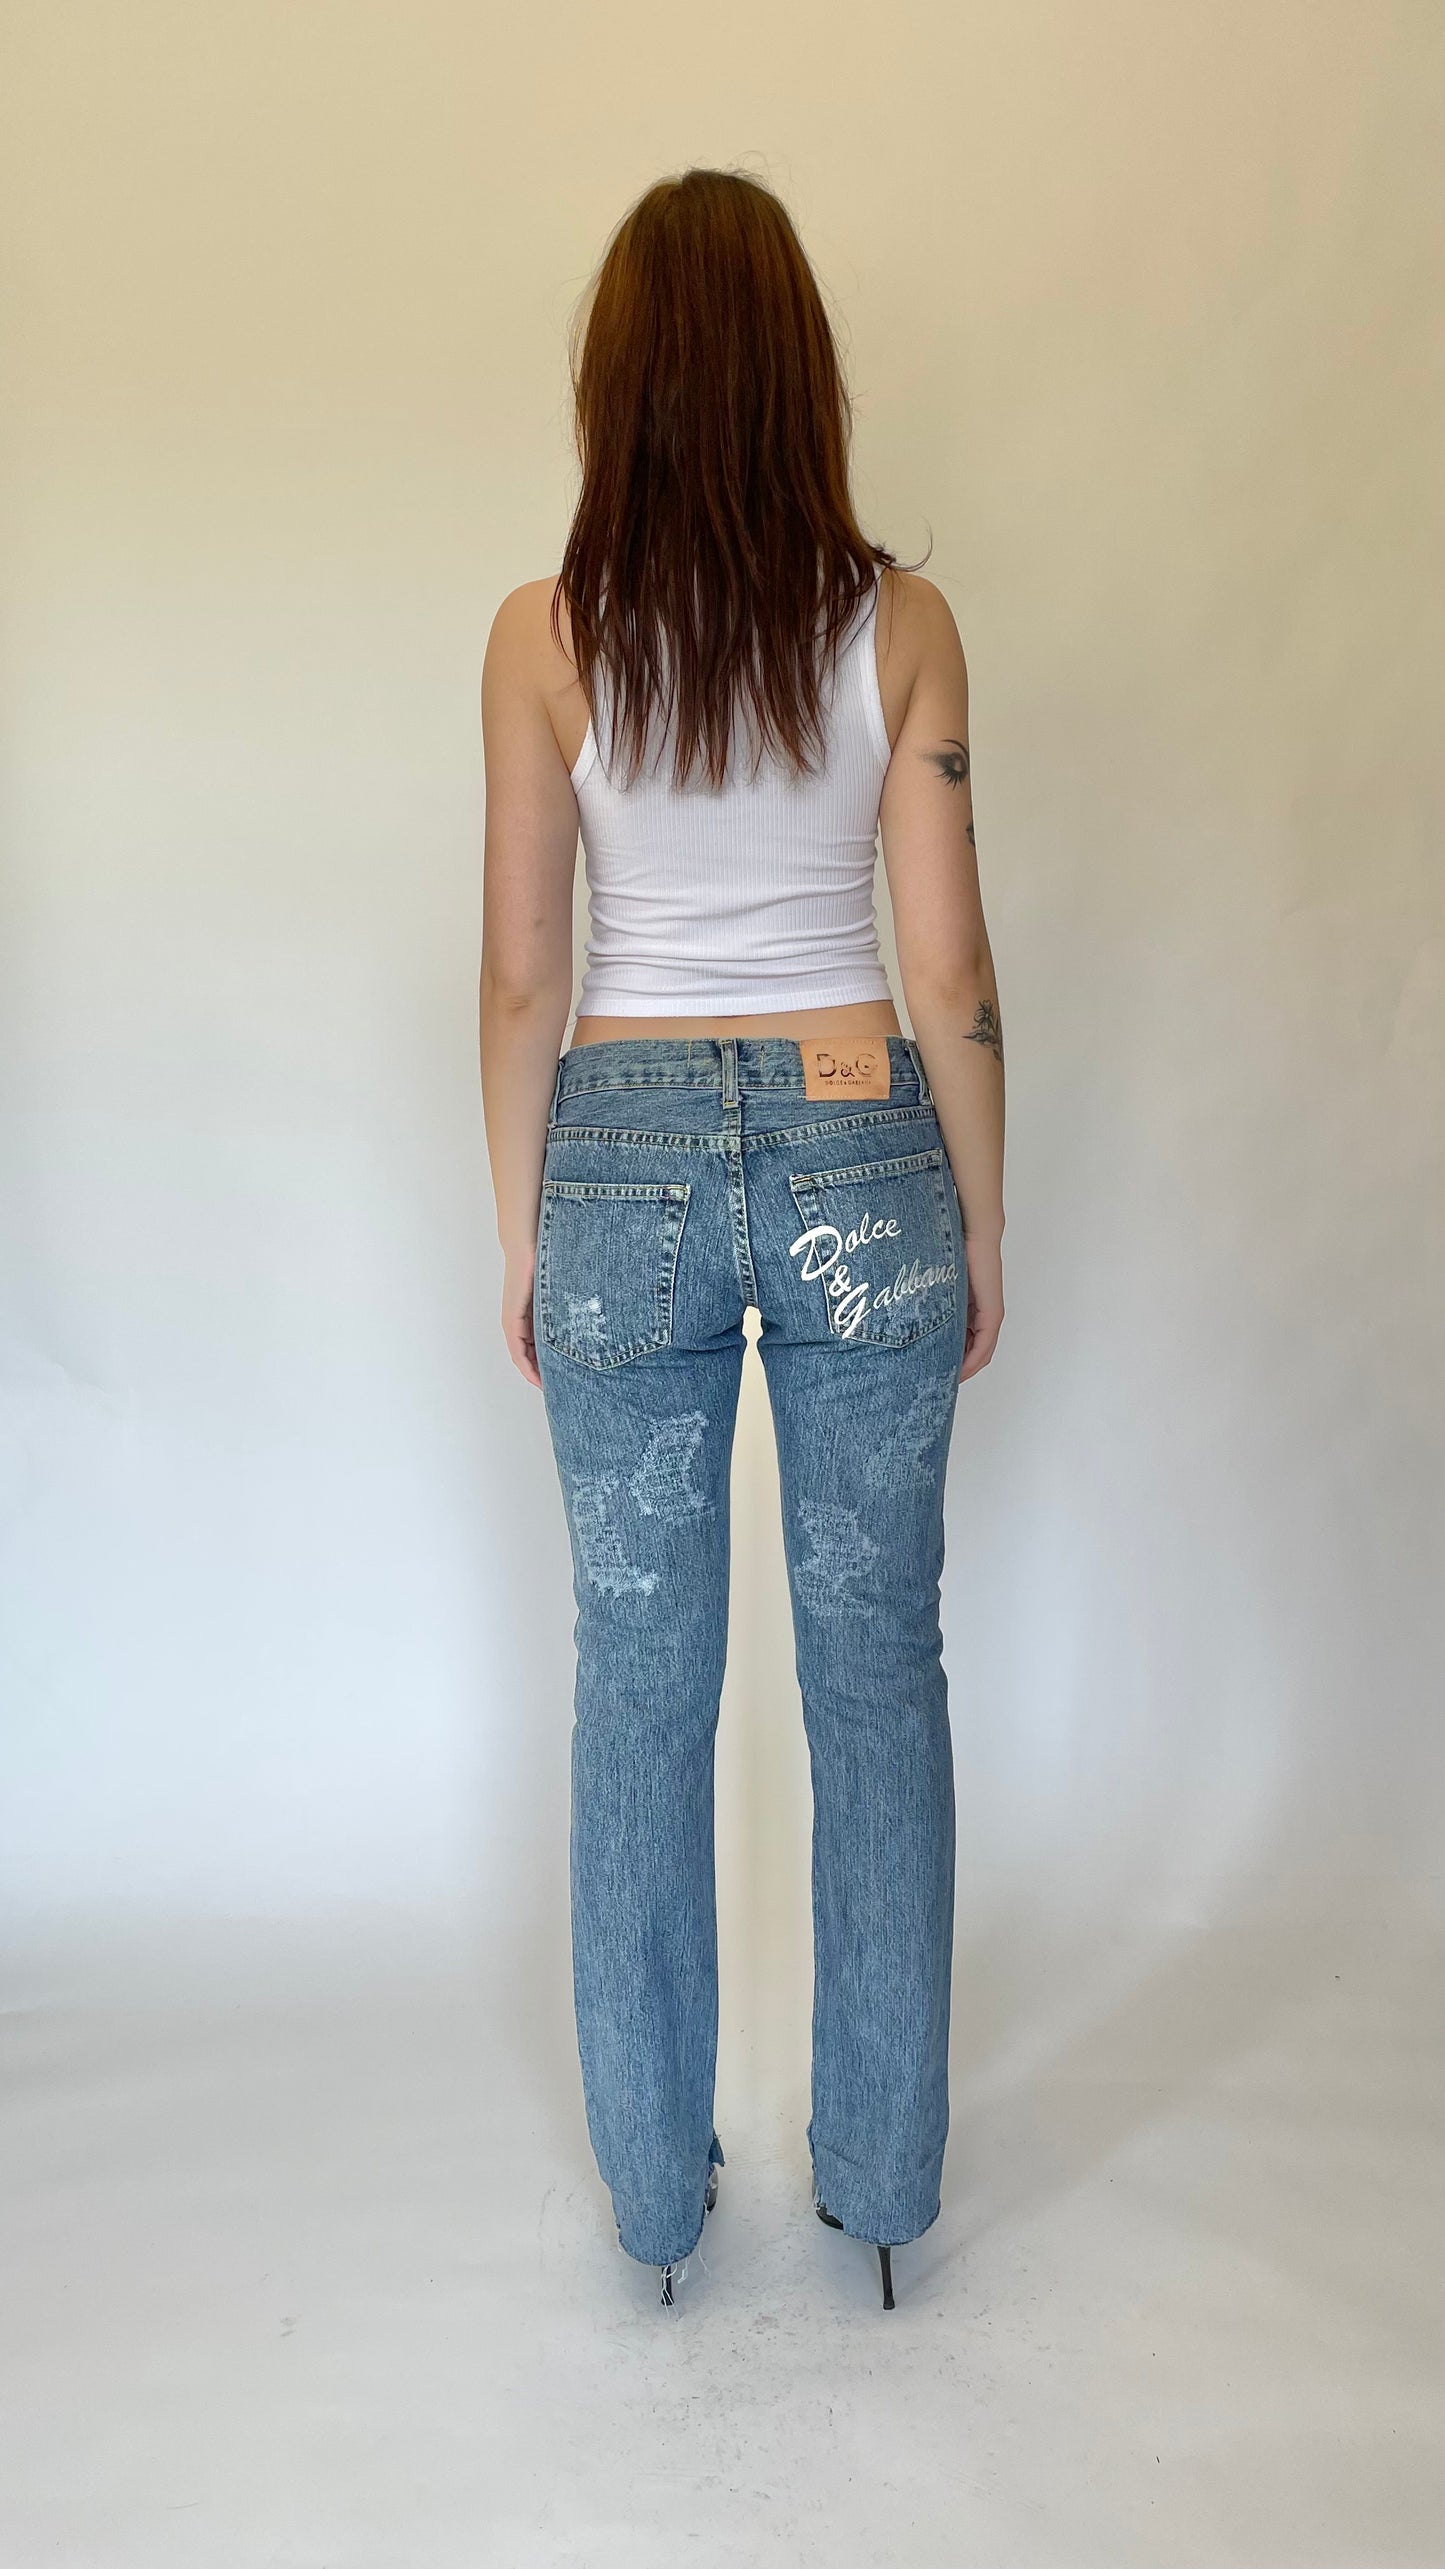 Dolce & Gabbana jeans (size 30)